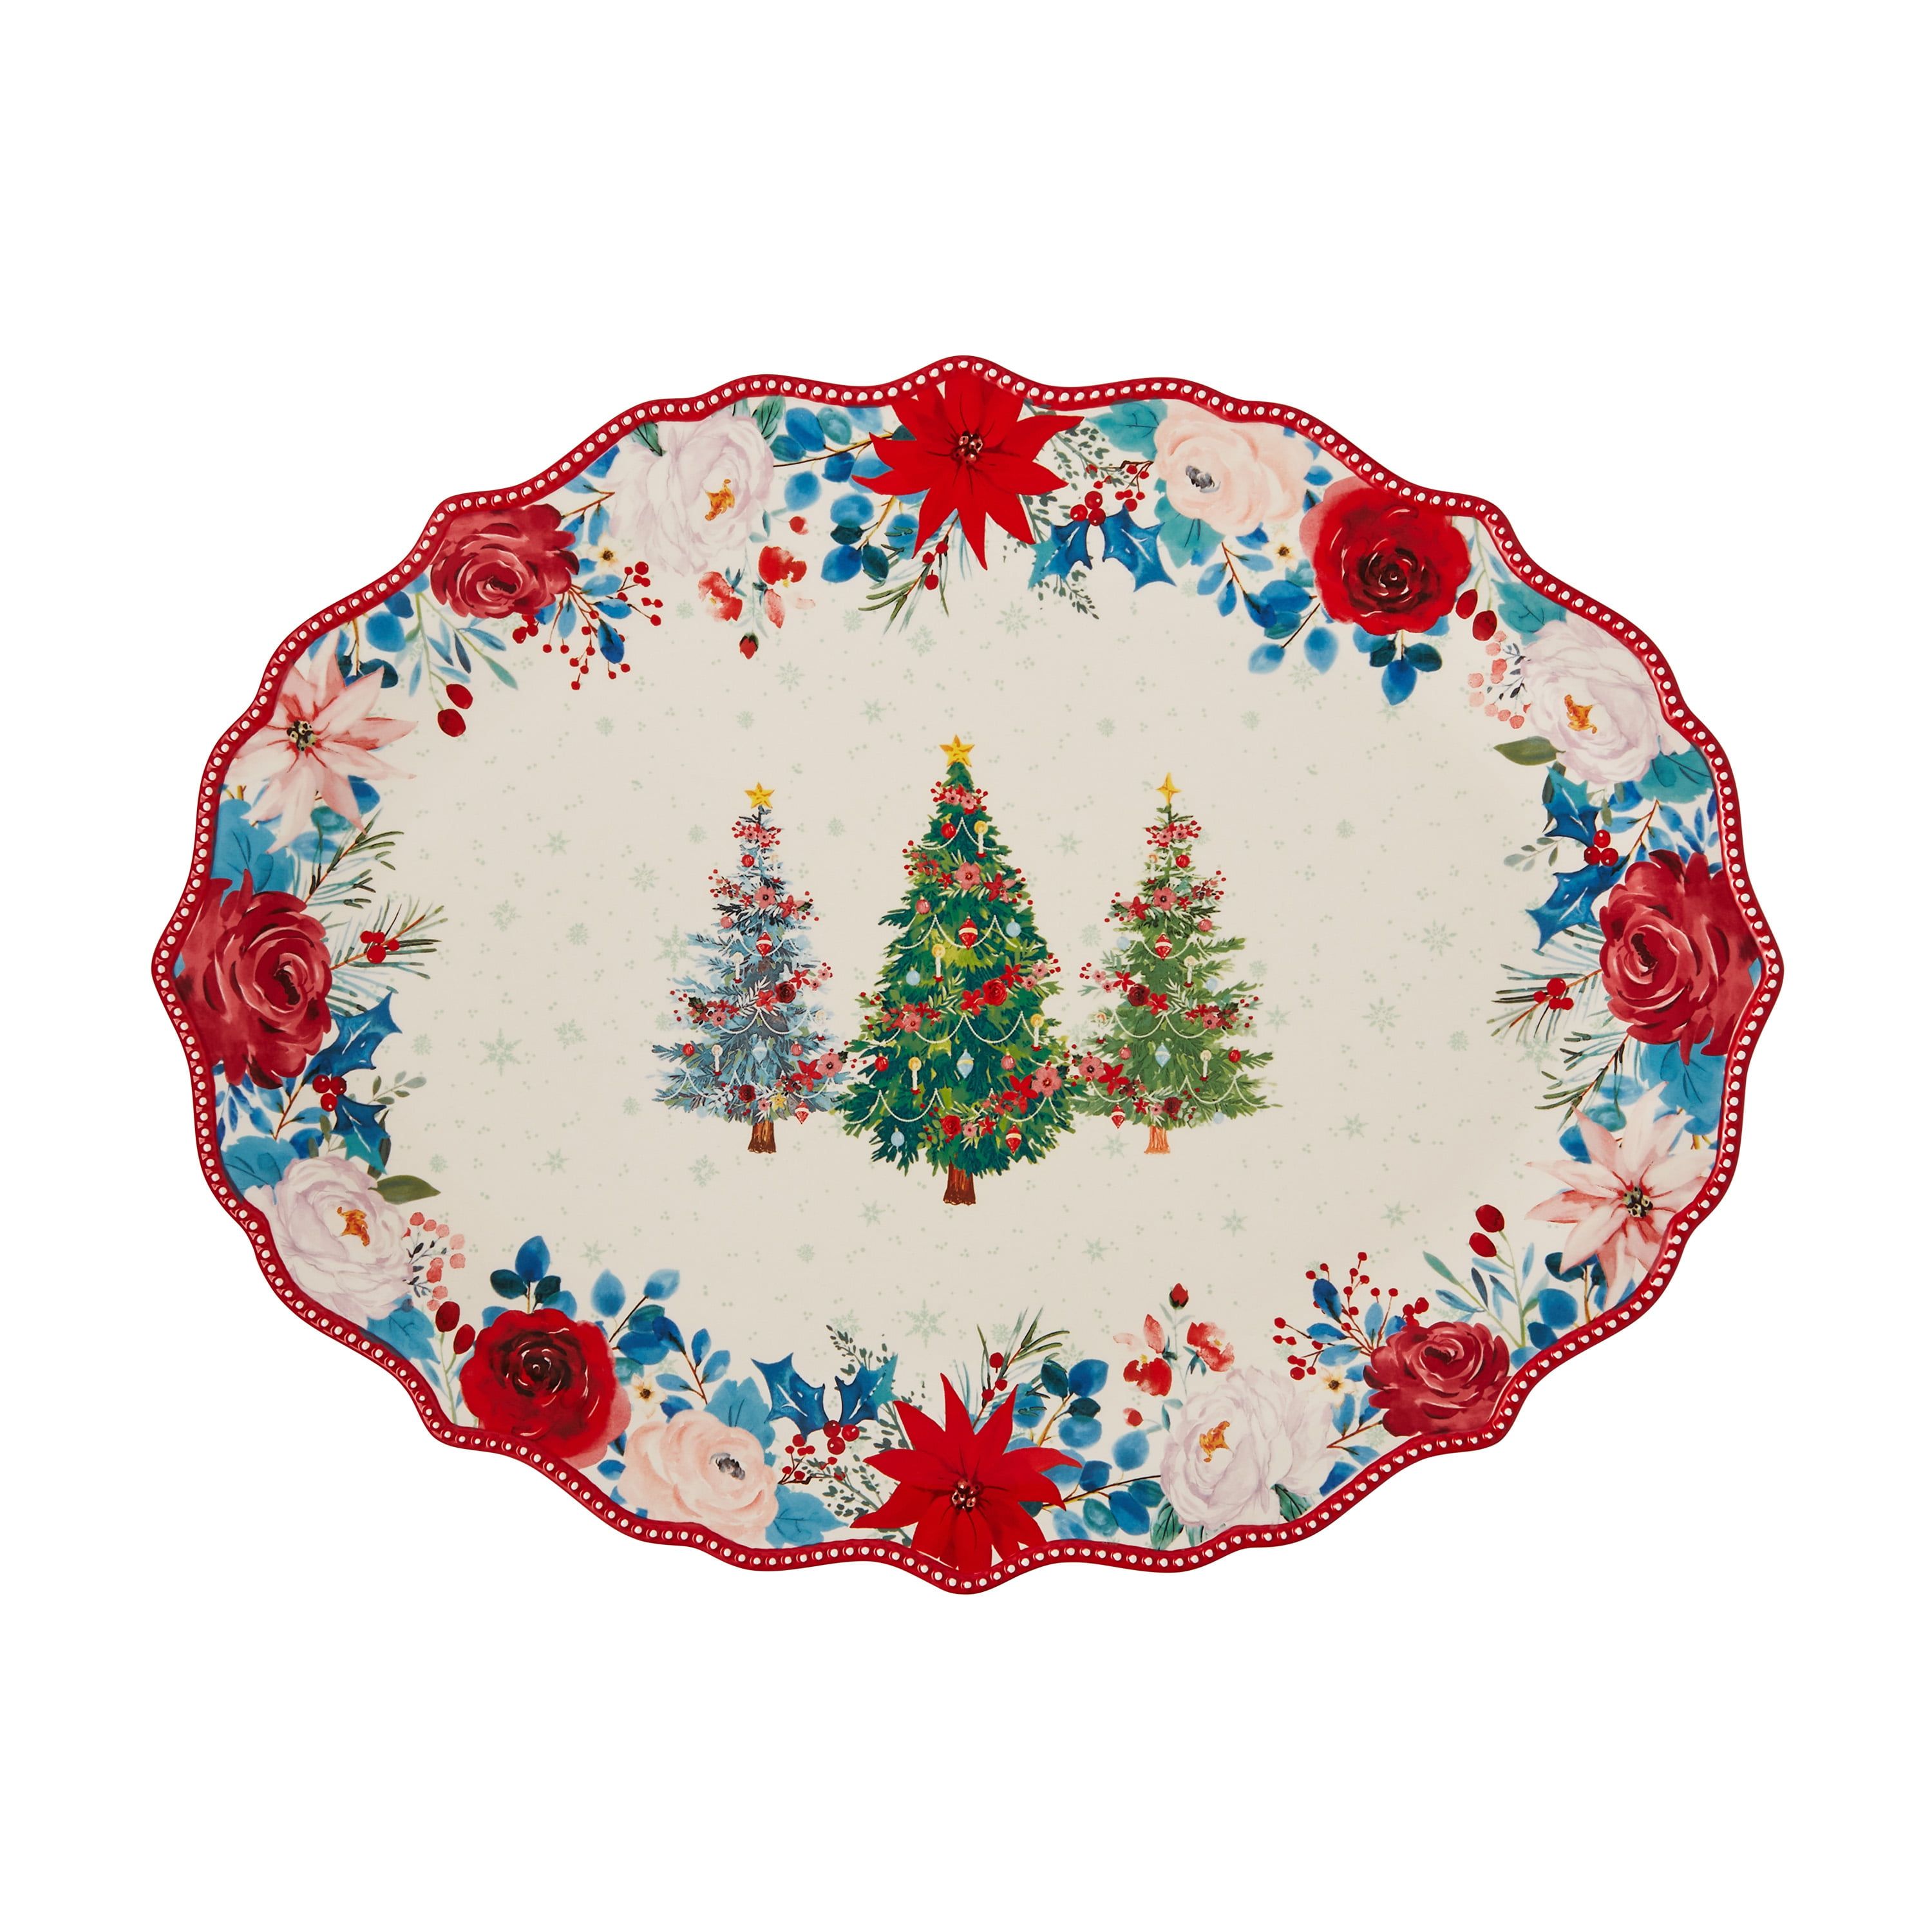 The Pioneer Woman Wishful Winter 21-Inch Ceramic Oval Serving Platter